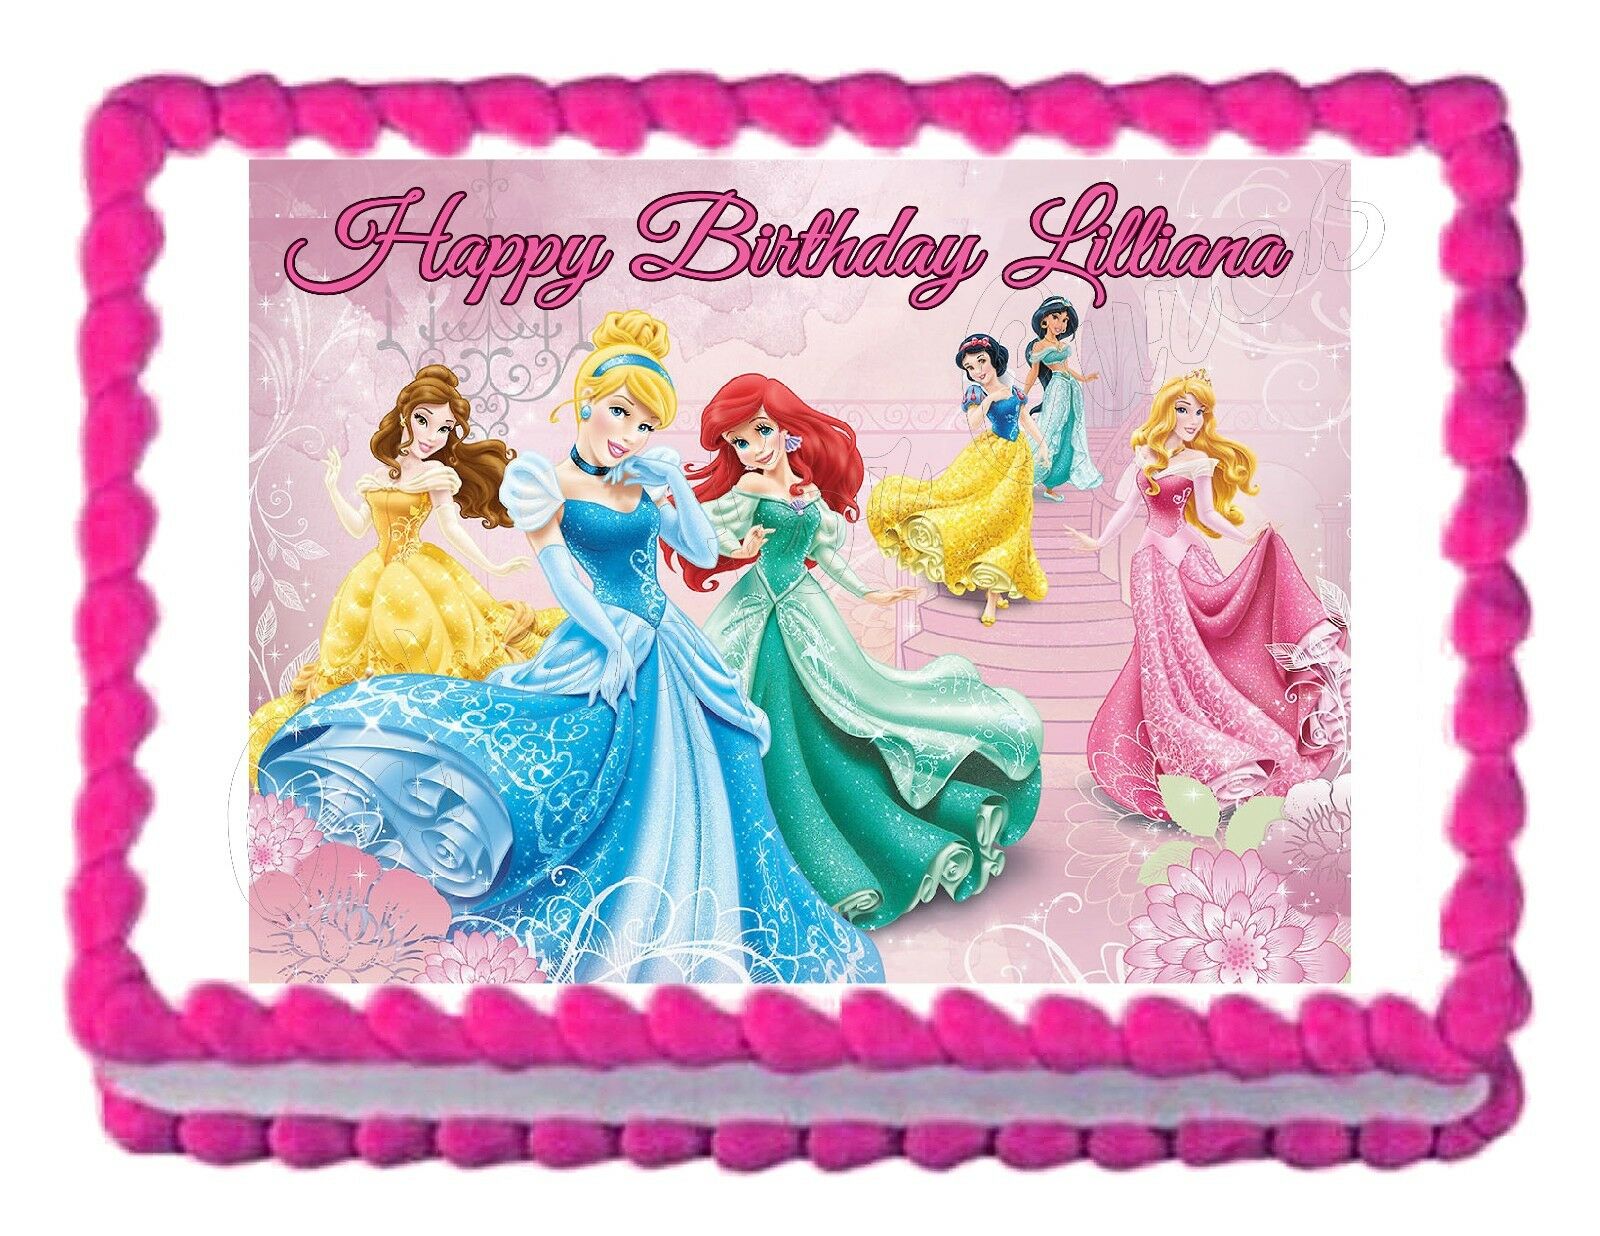 Disney world - cake by Gentlemen's Cakes | Disney birthday cakes, Disney  themed cakes, Disney cakes